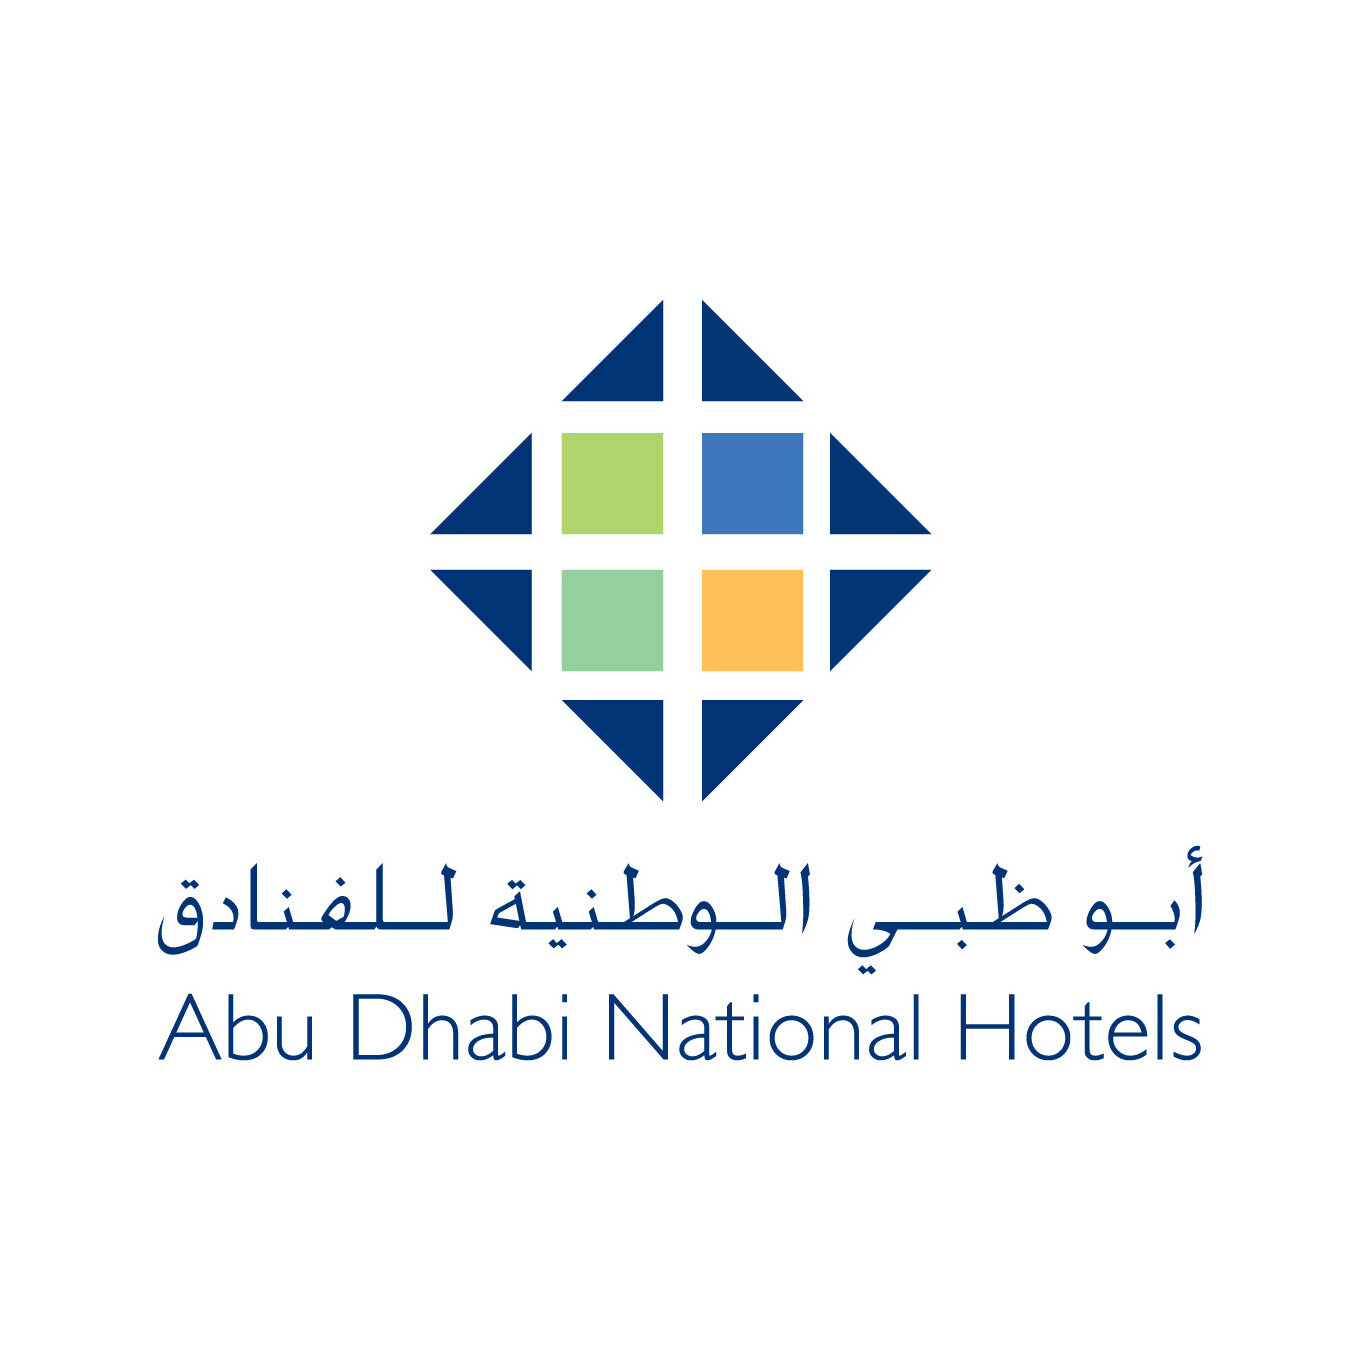 Abu Dhabi National Hotels Company Pjsc